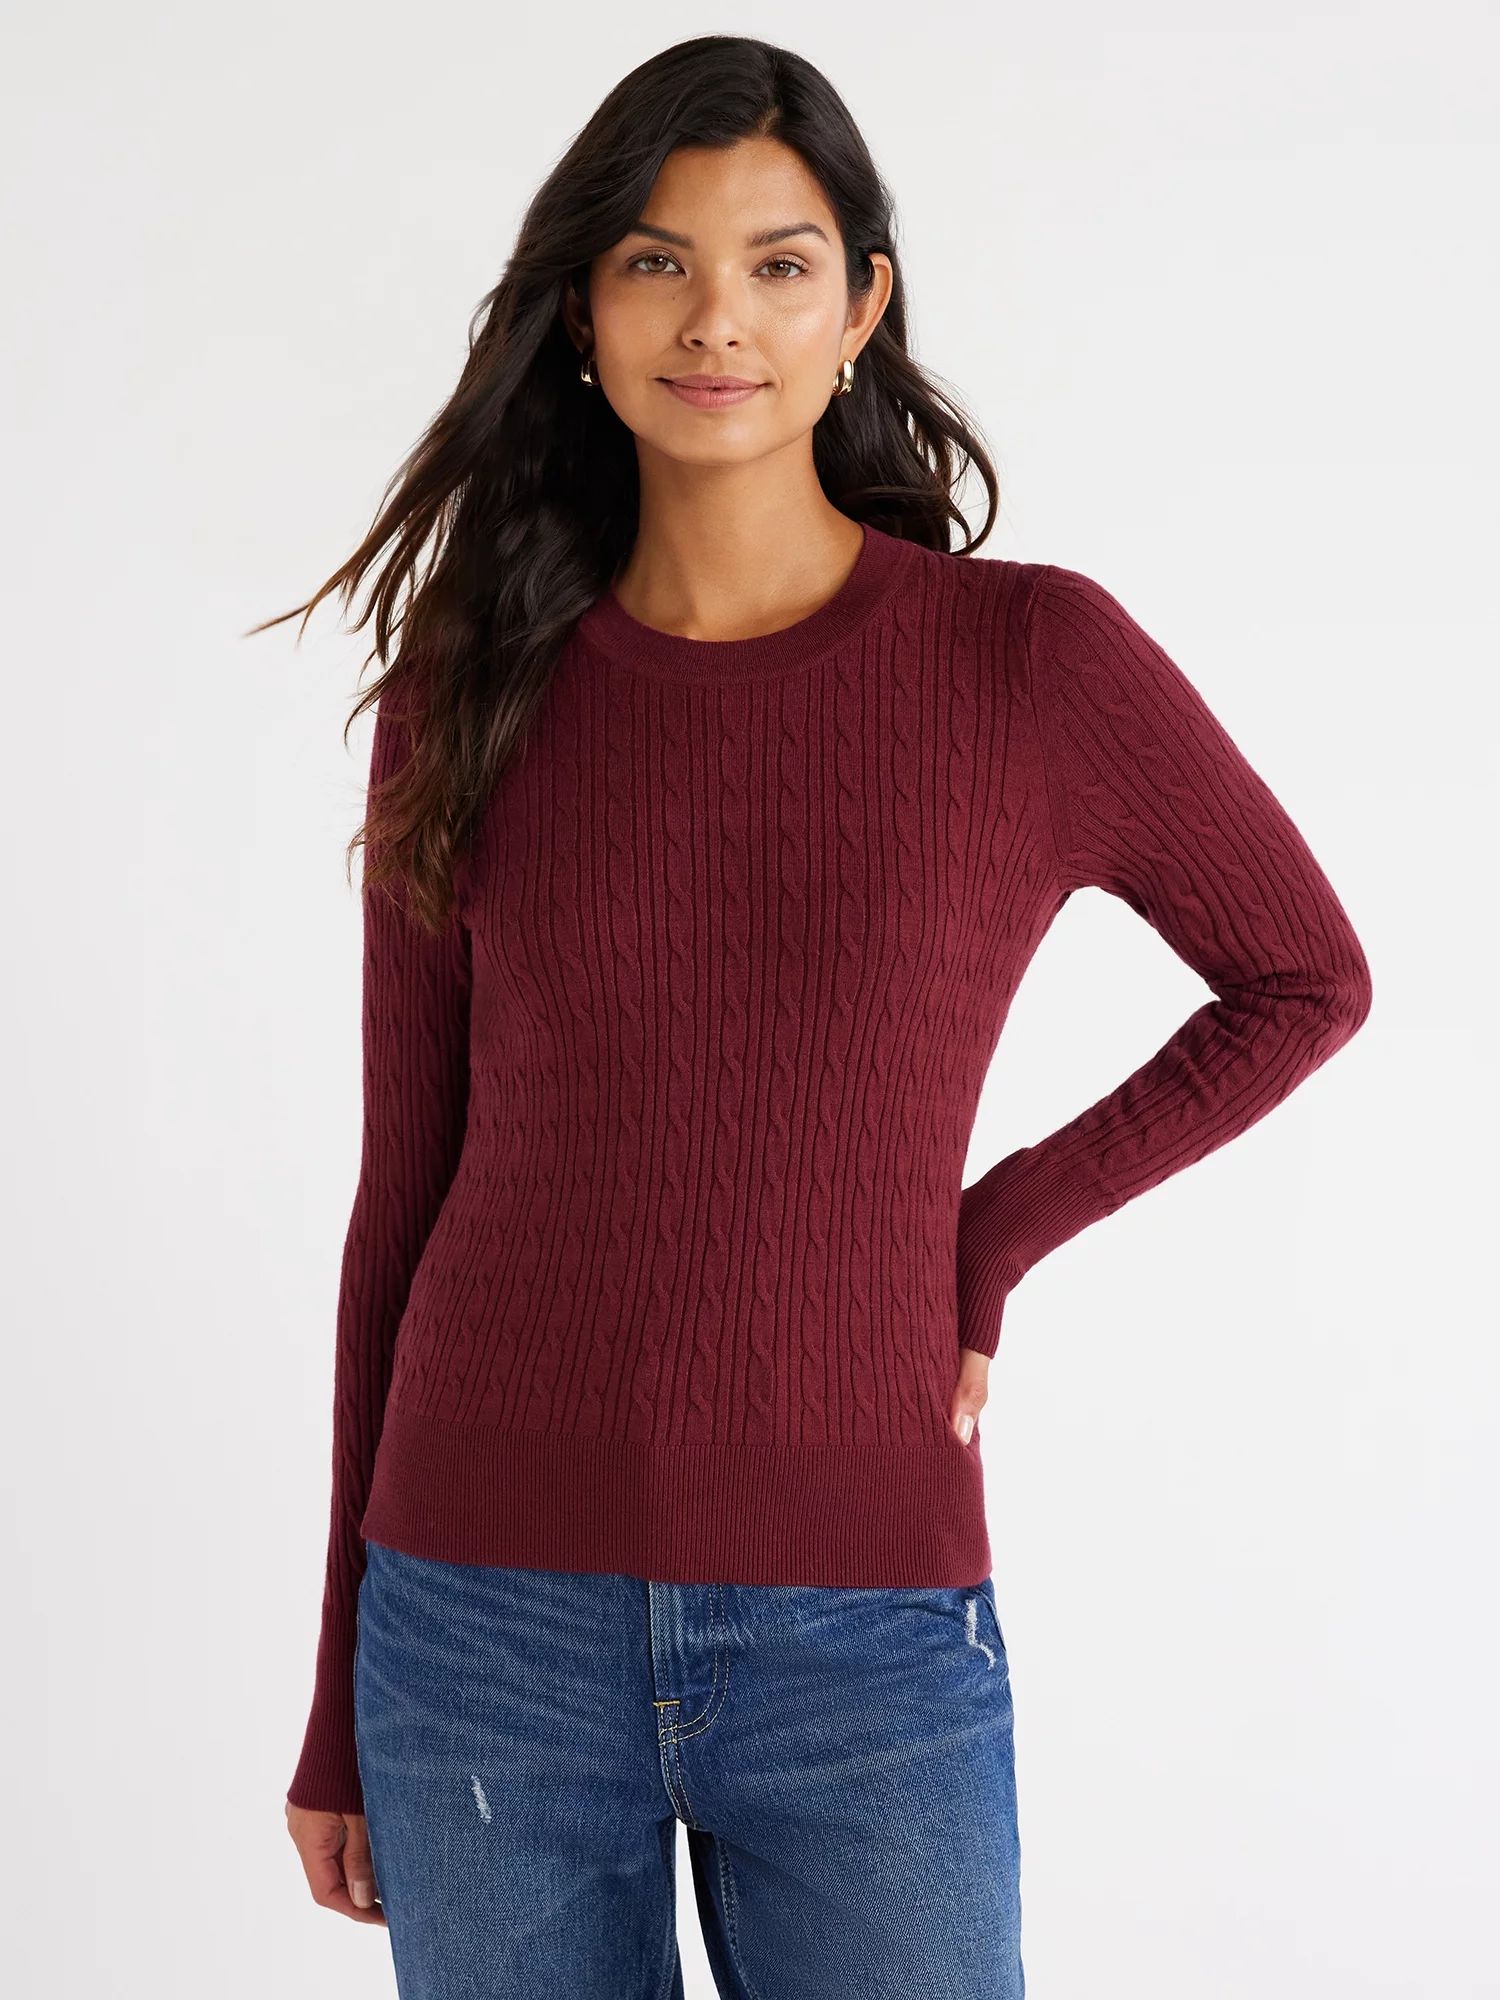 Free Assembly Women’s Cable Knit Crewneck Sweater, Midweight, Sizes XS-XXXL | Walmart (US)